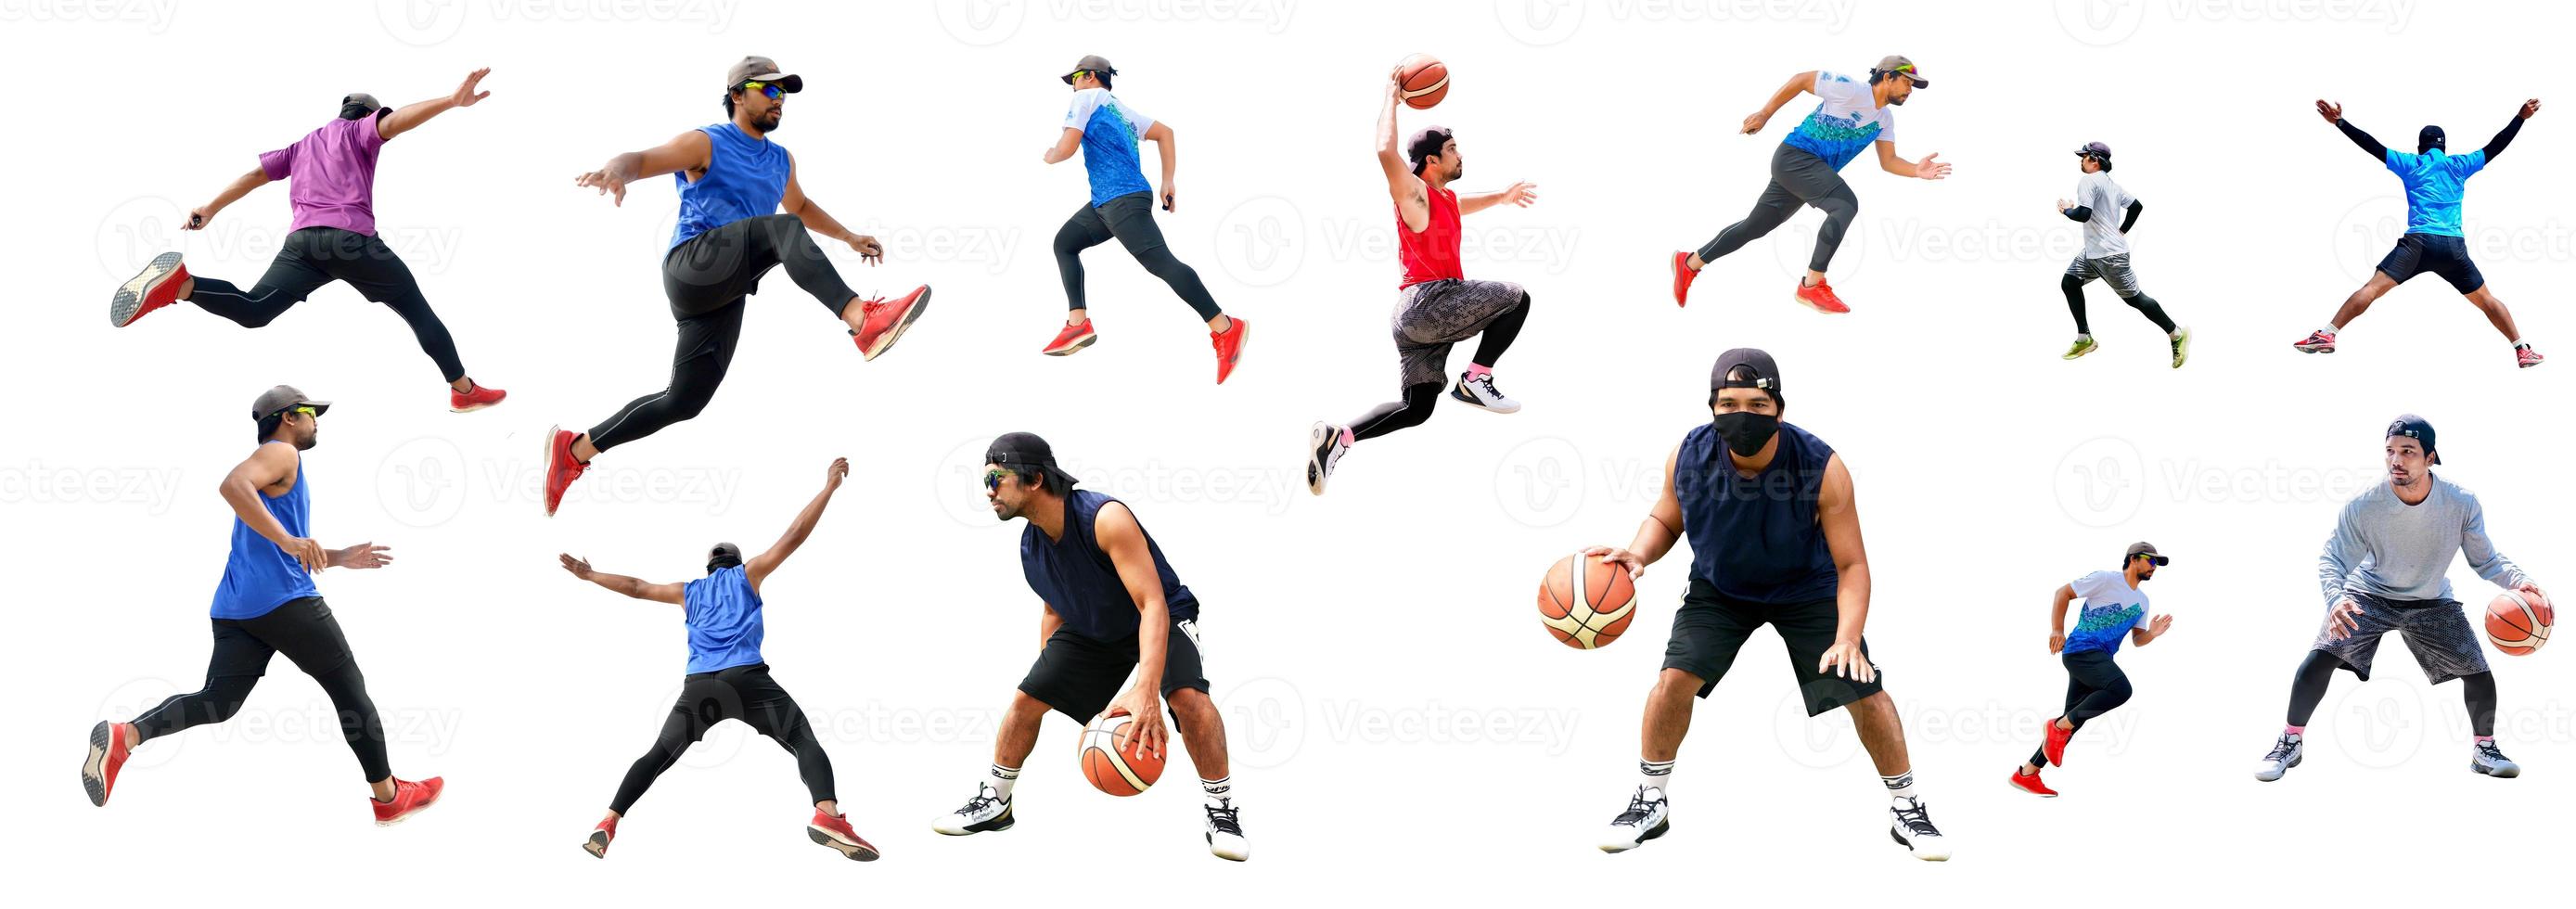 men's sports Asians on a white background photo